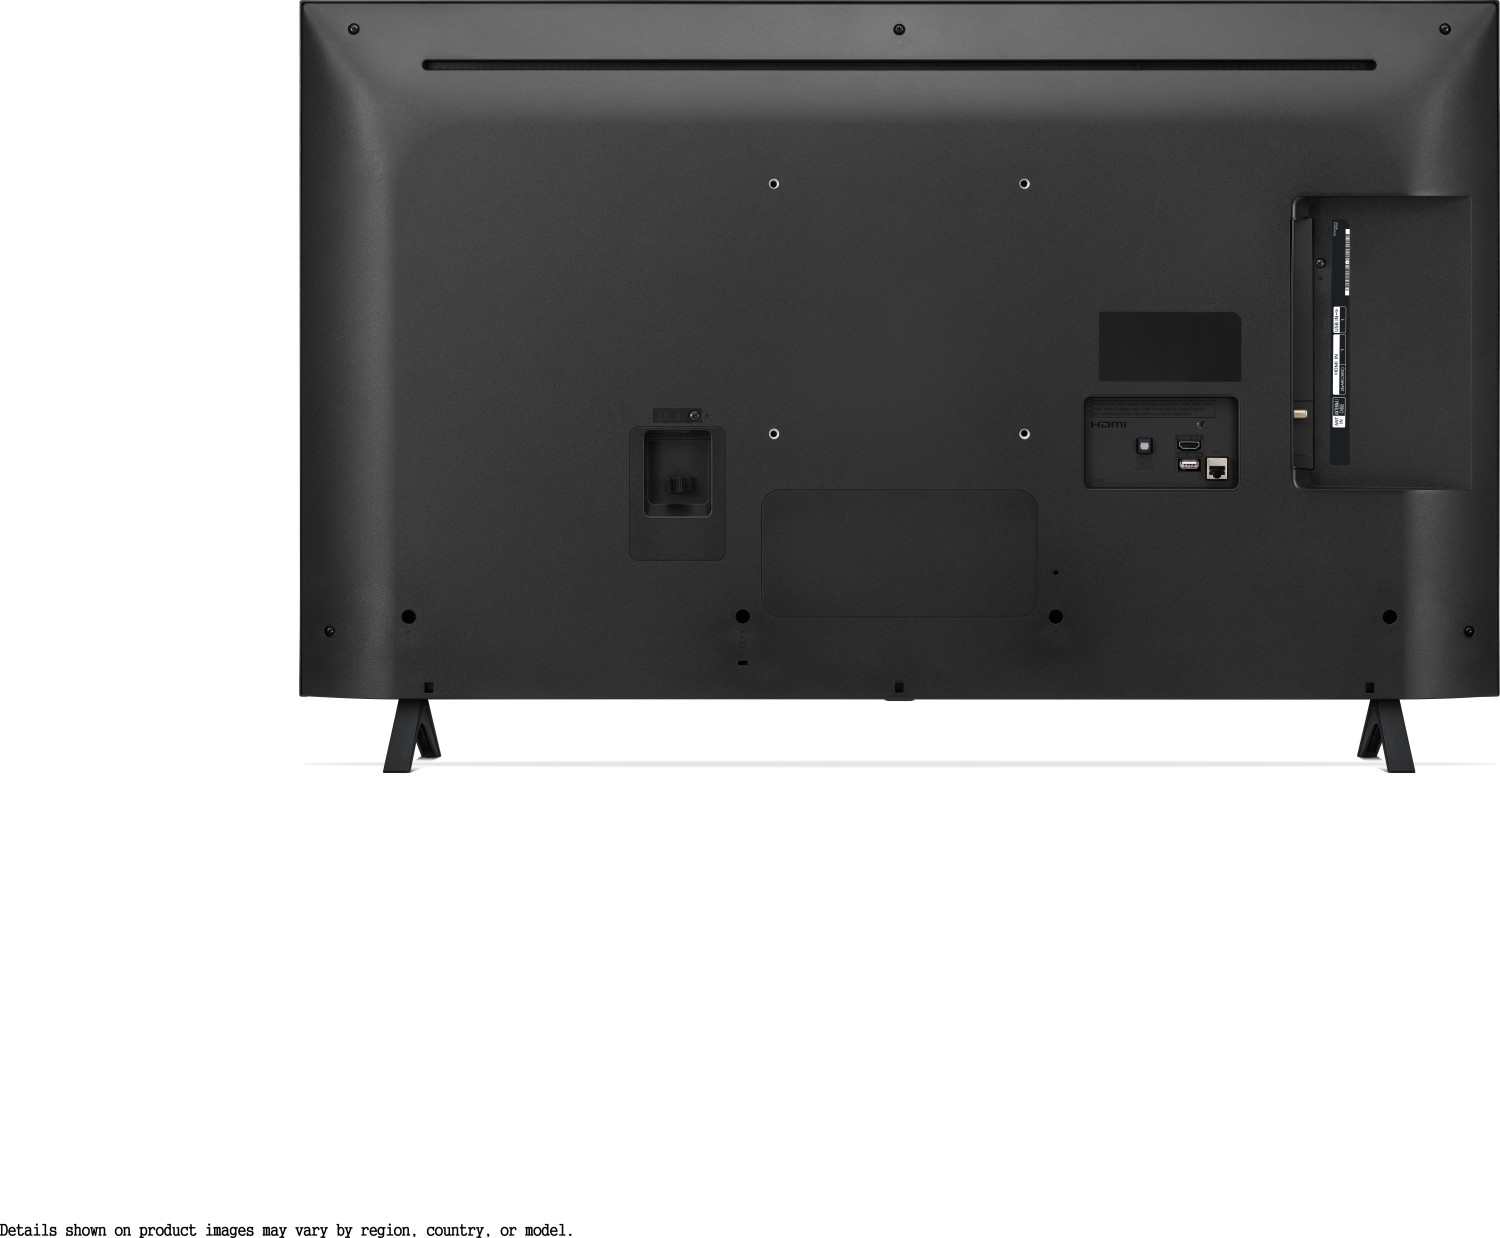 LG 65UR7800 165 cm (65 Zoll) UHD Fernseher  (Active HDR, 60 Hz, Smart TV) 